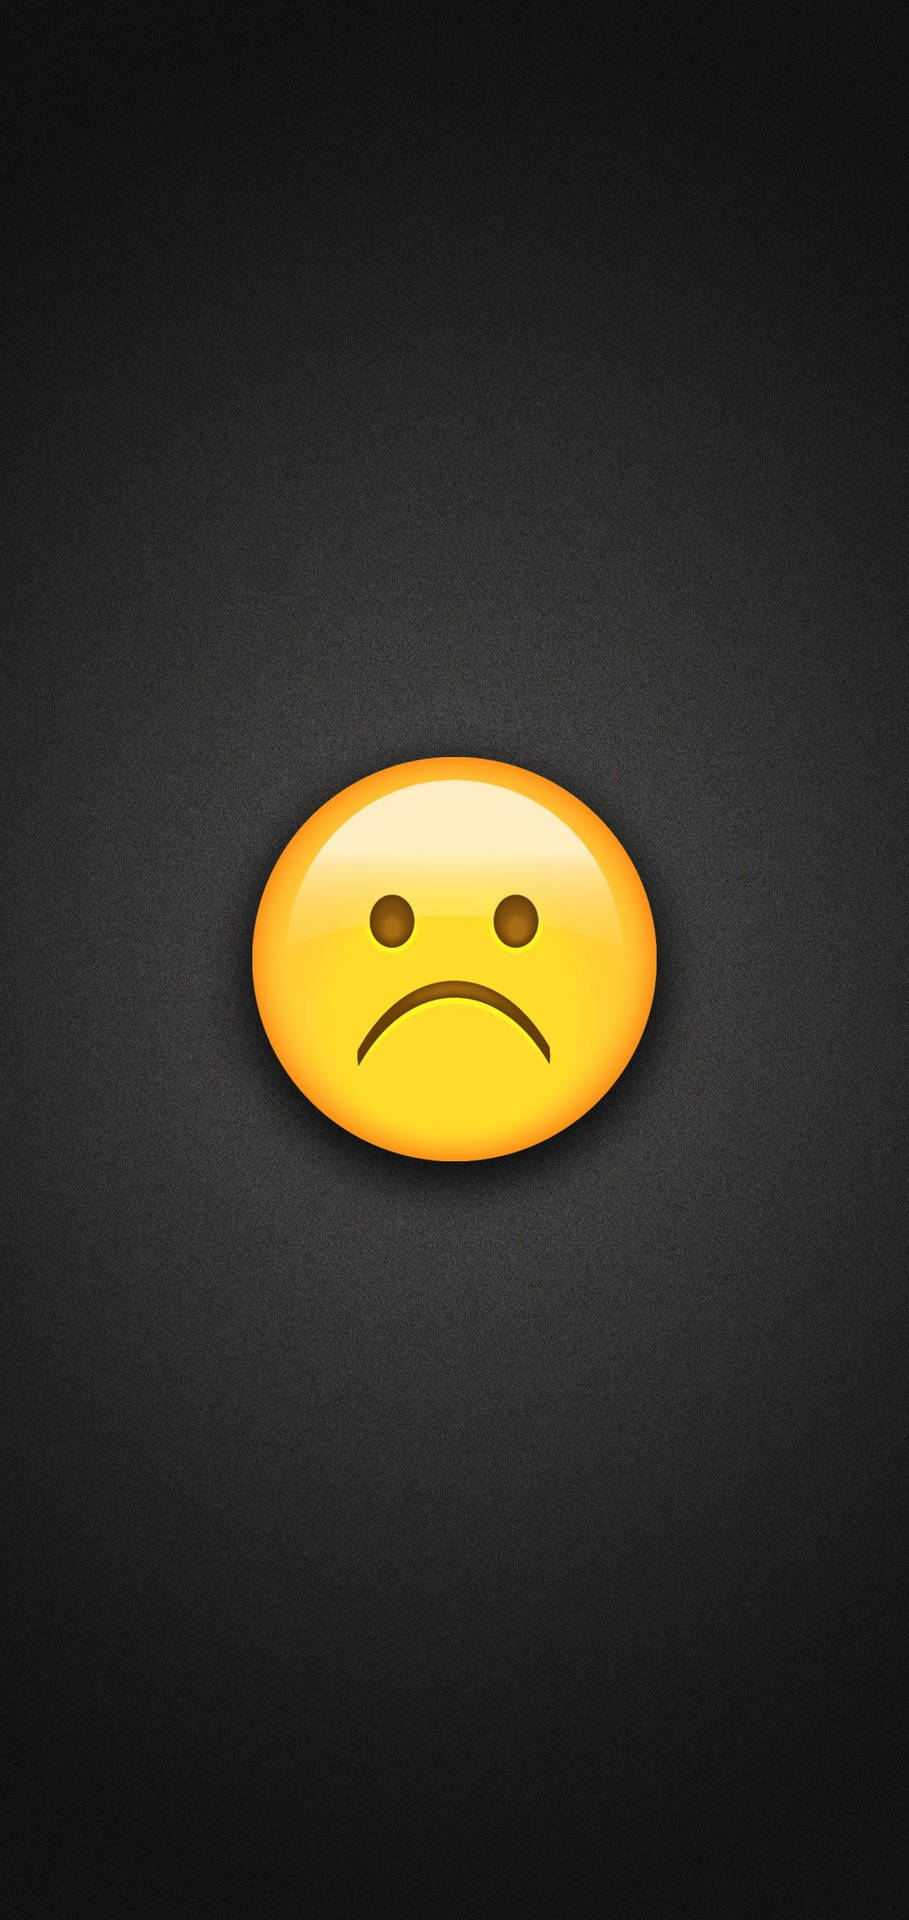 Free Sad Emoji Wallpaper Downloads, Sad Emoji Wallpaper for FREE